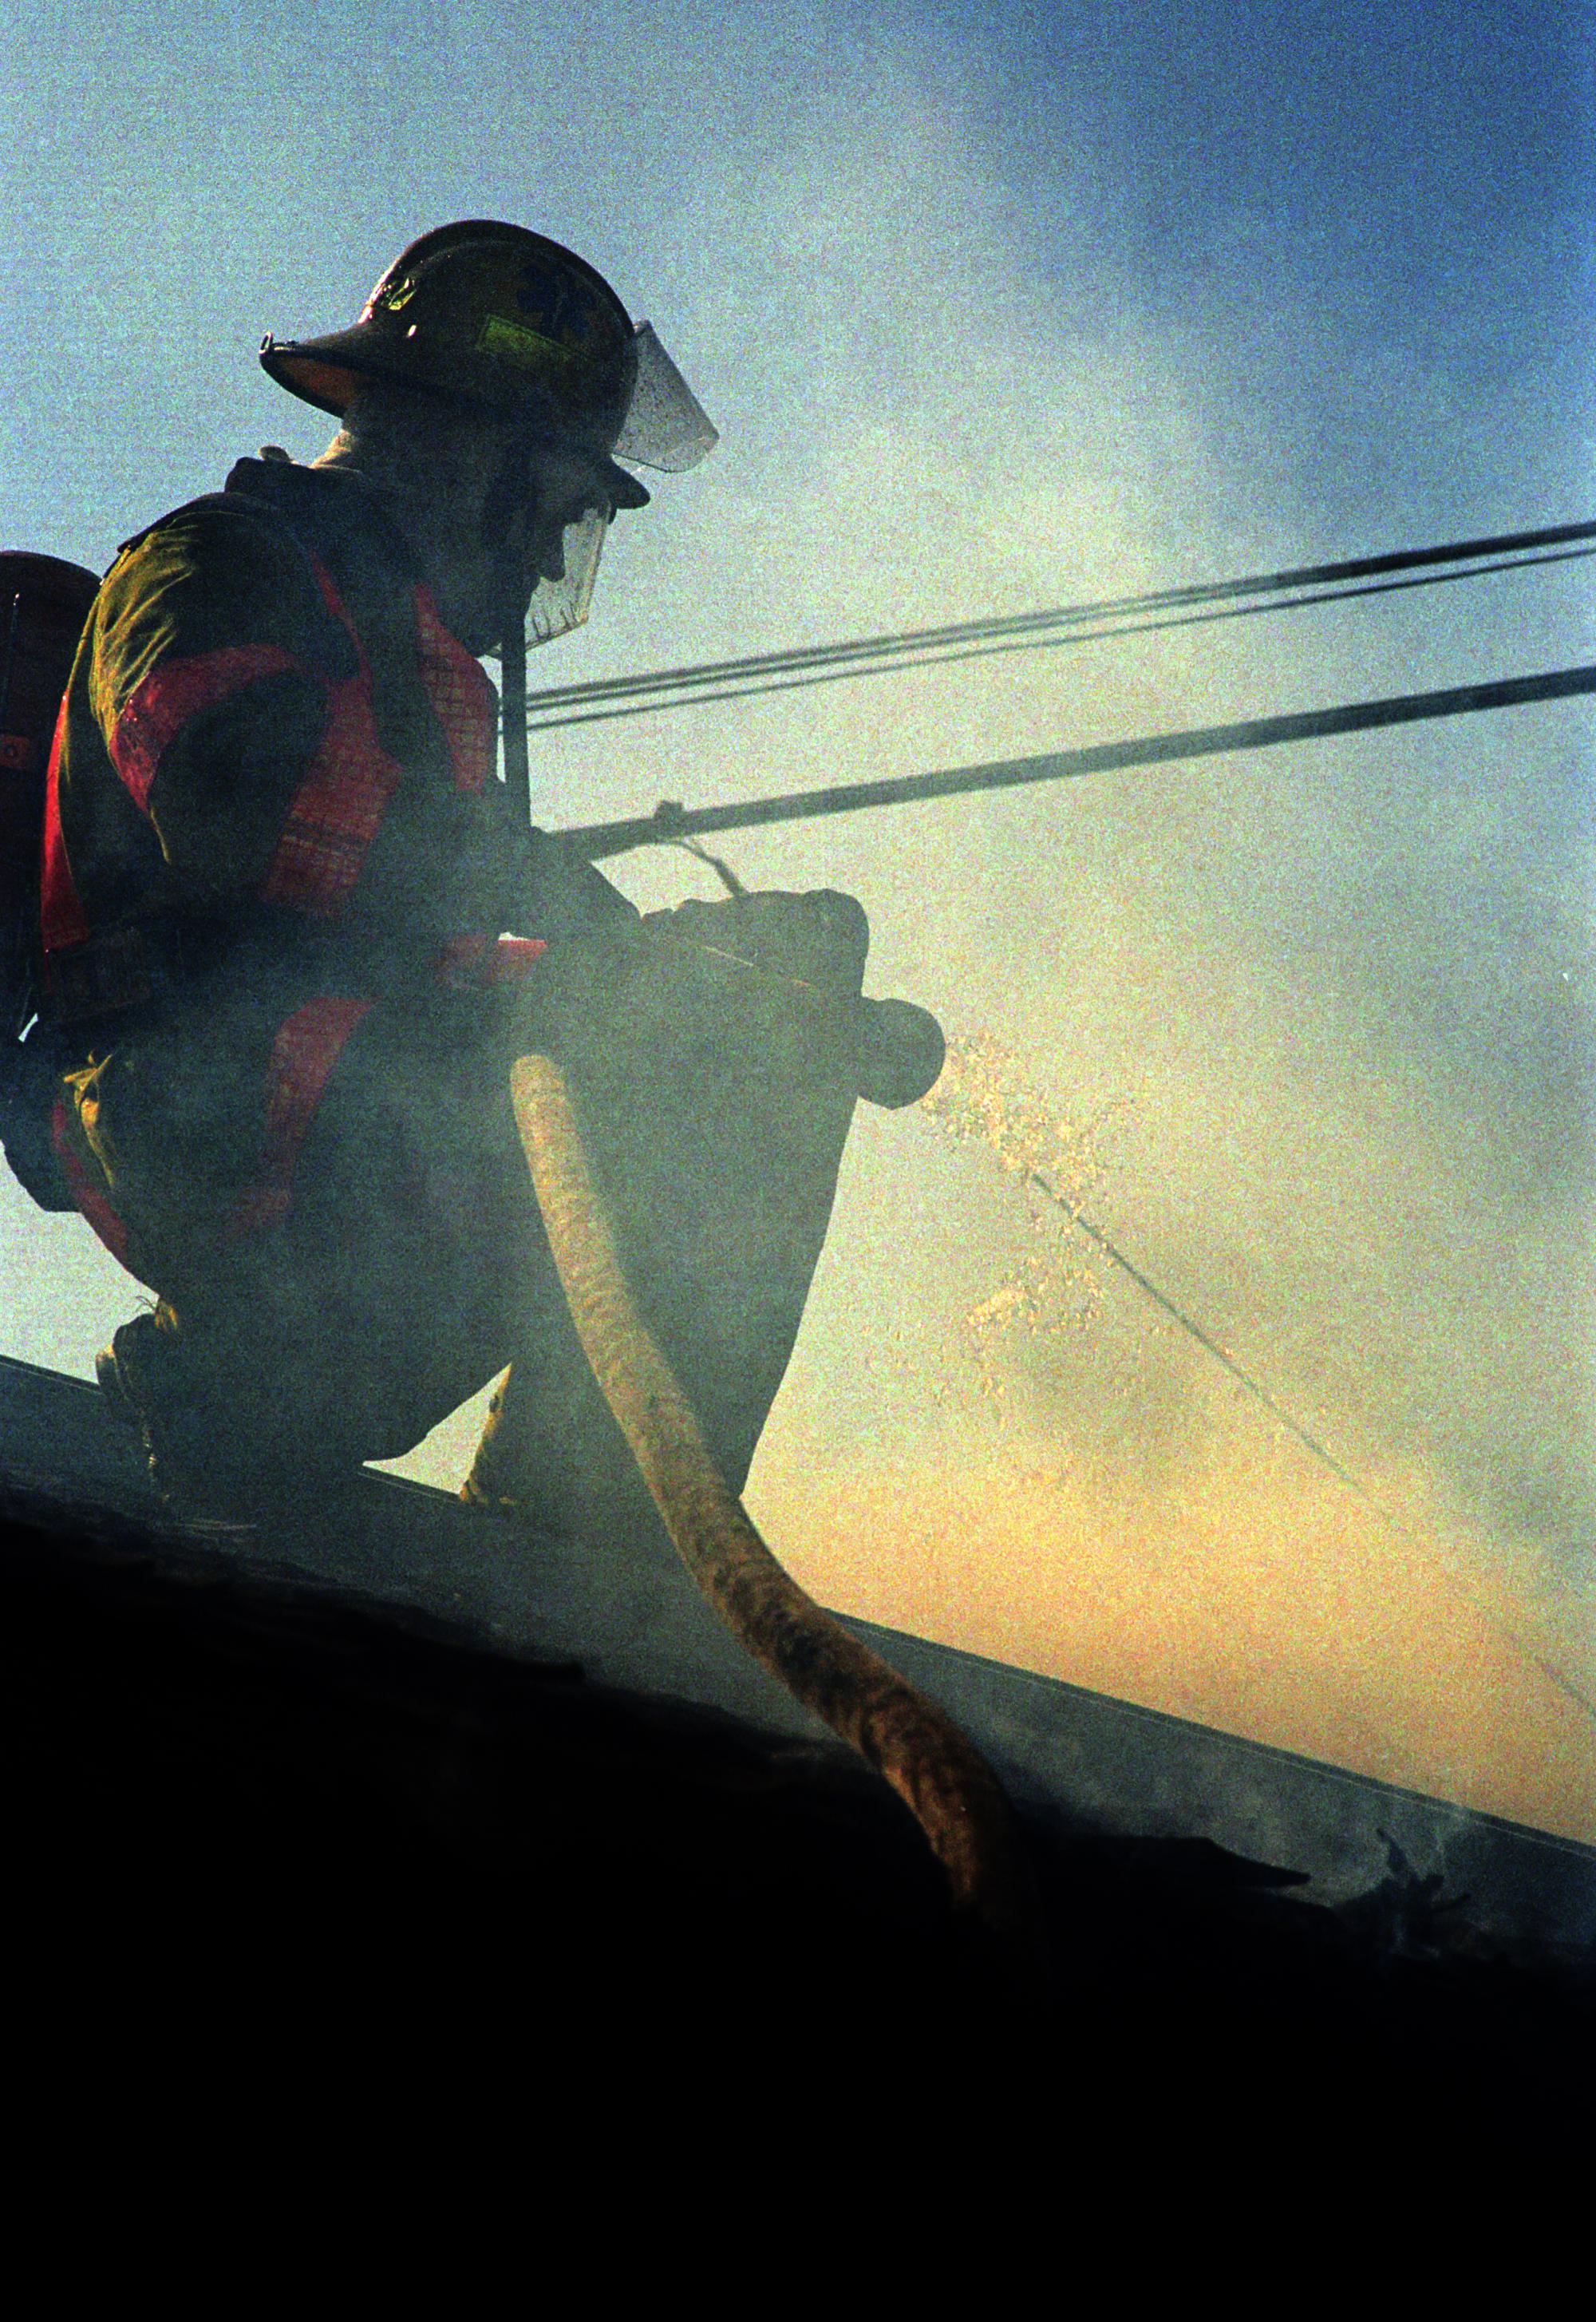 Imperial Valley Press (1992) - El Centro Firefighter